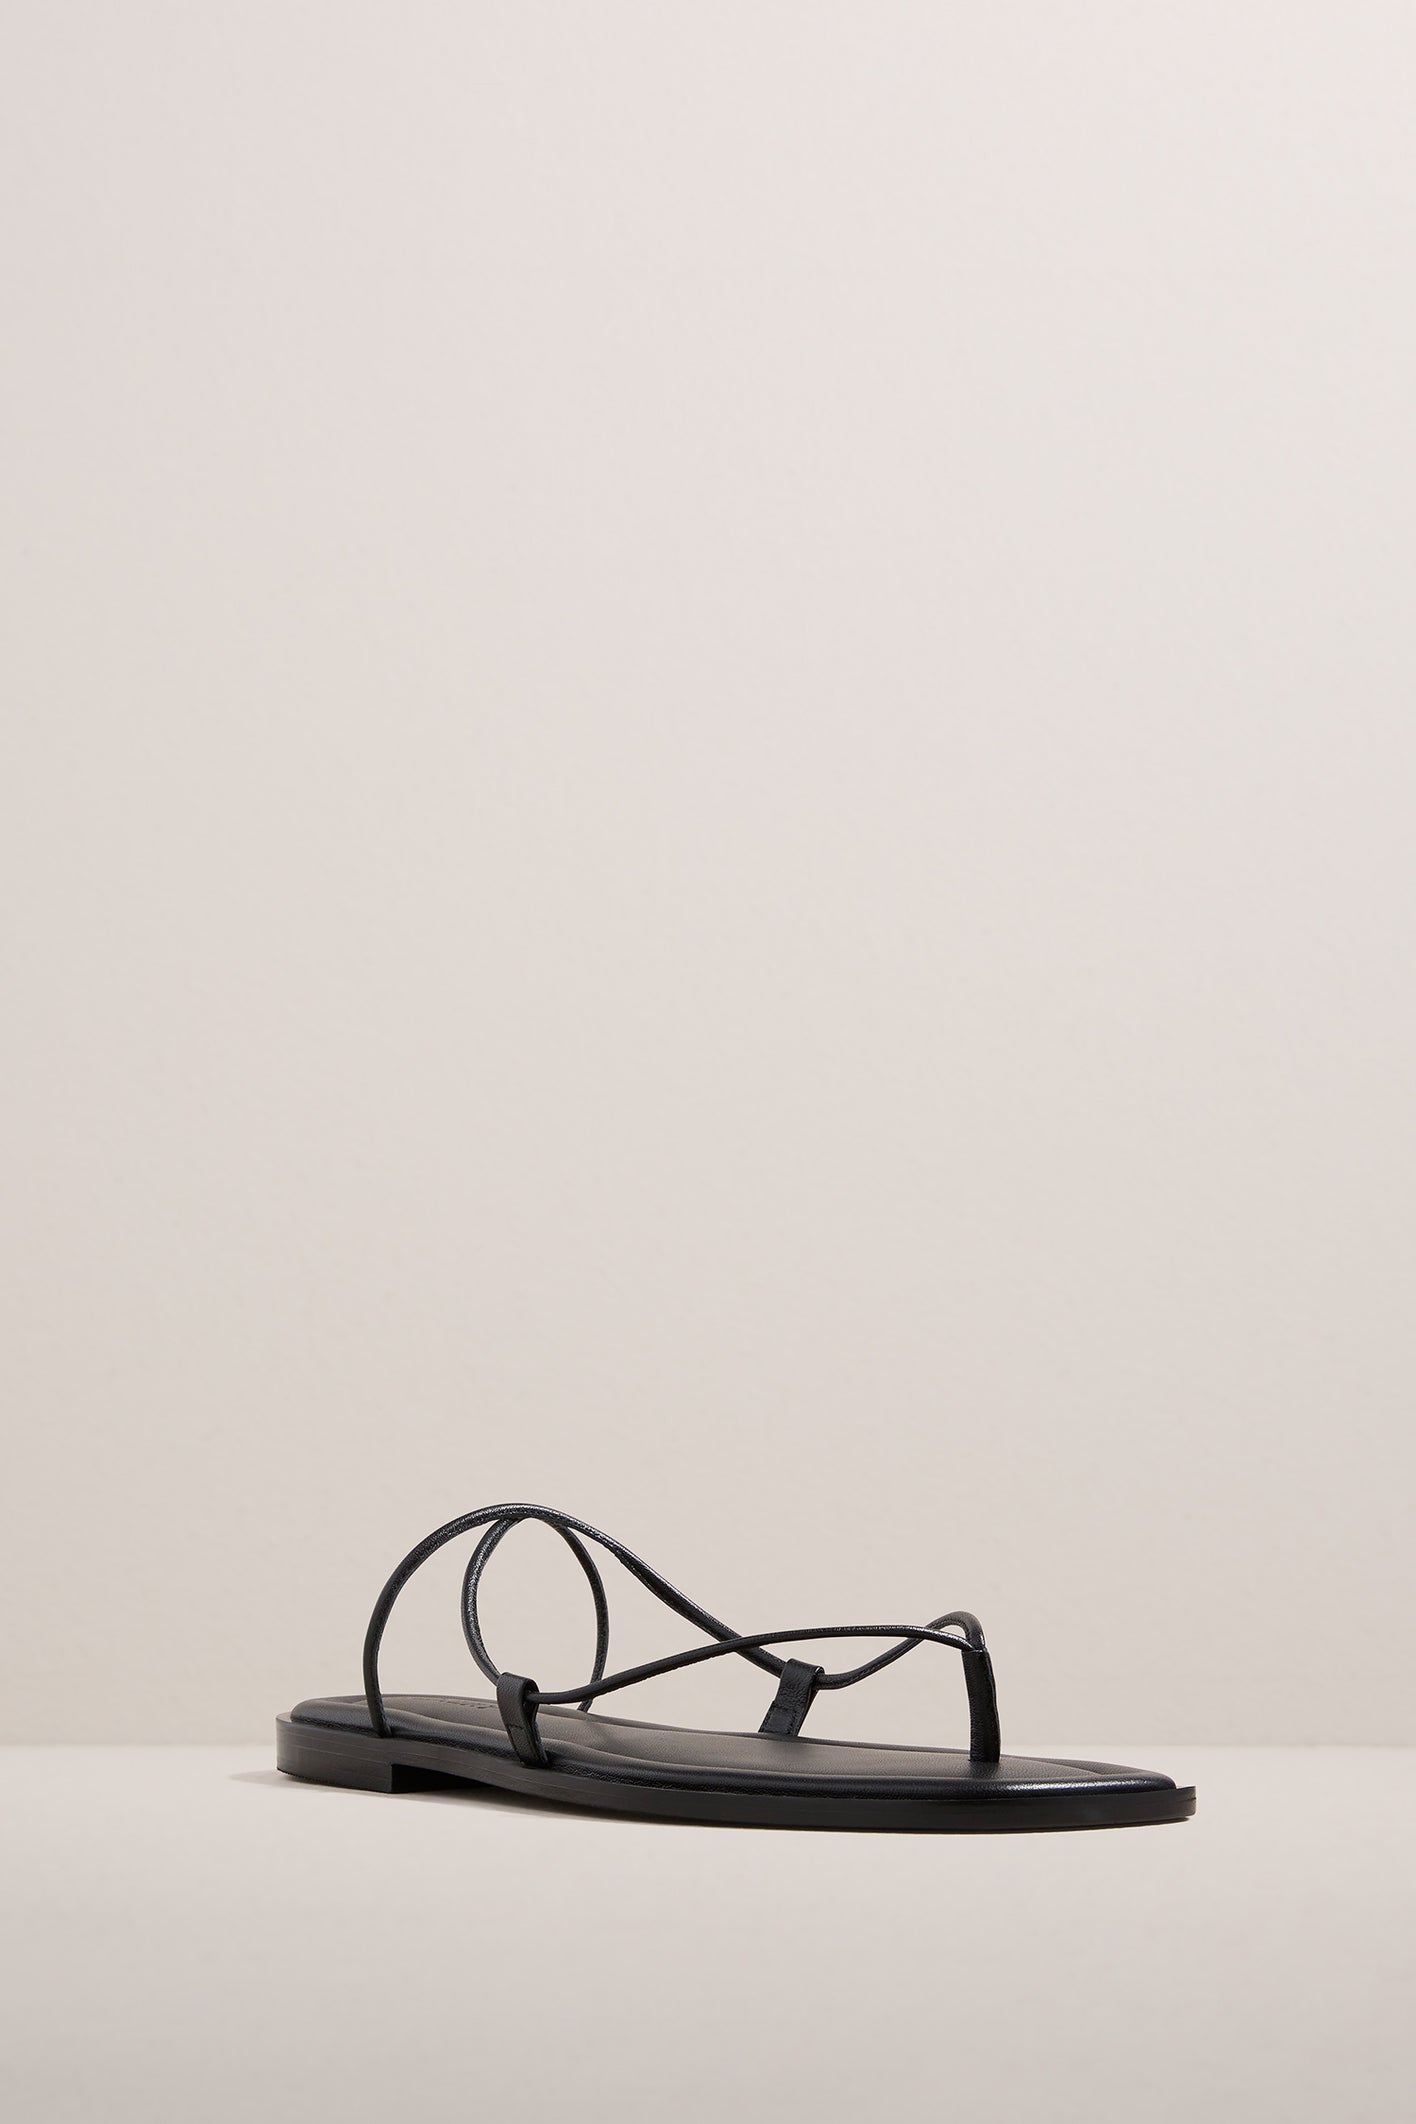 A.Emery | The Nodi Sandal - Black